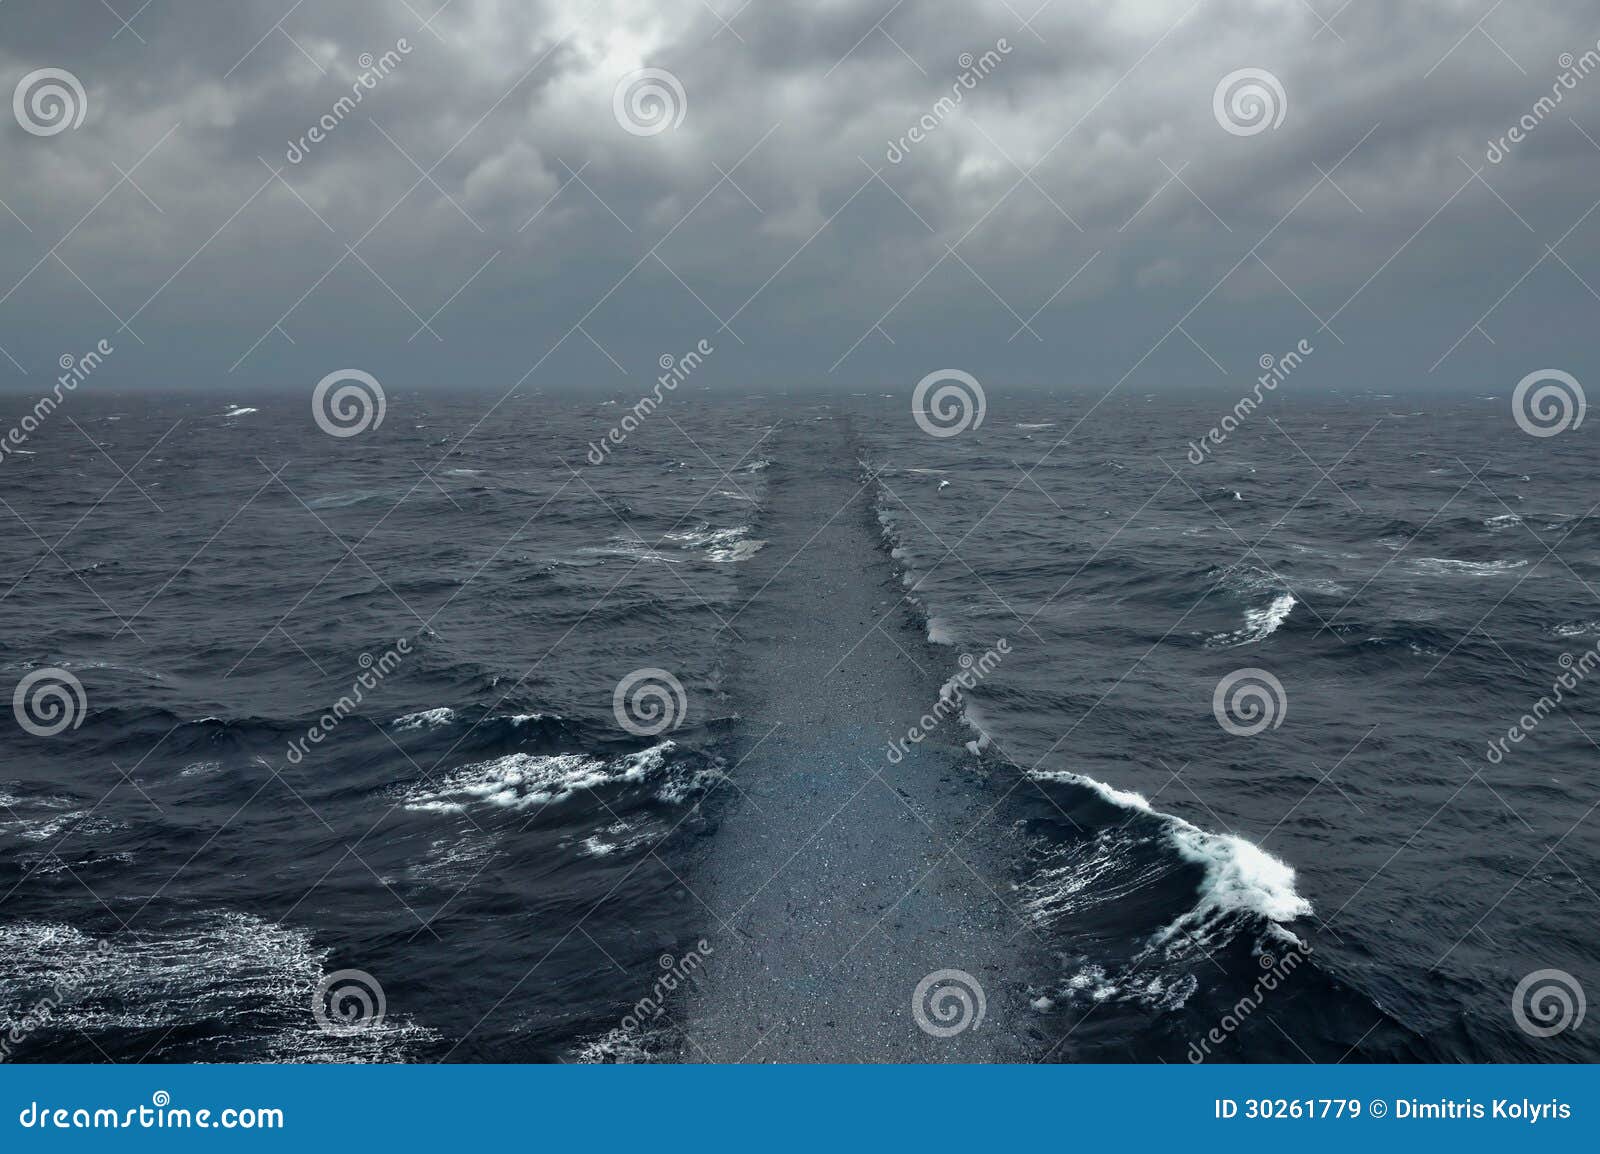 sea road ocean crossing